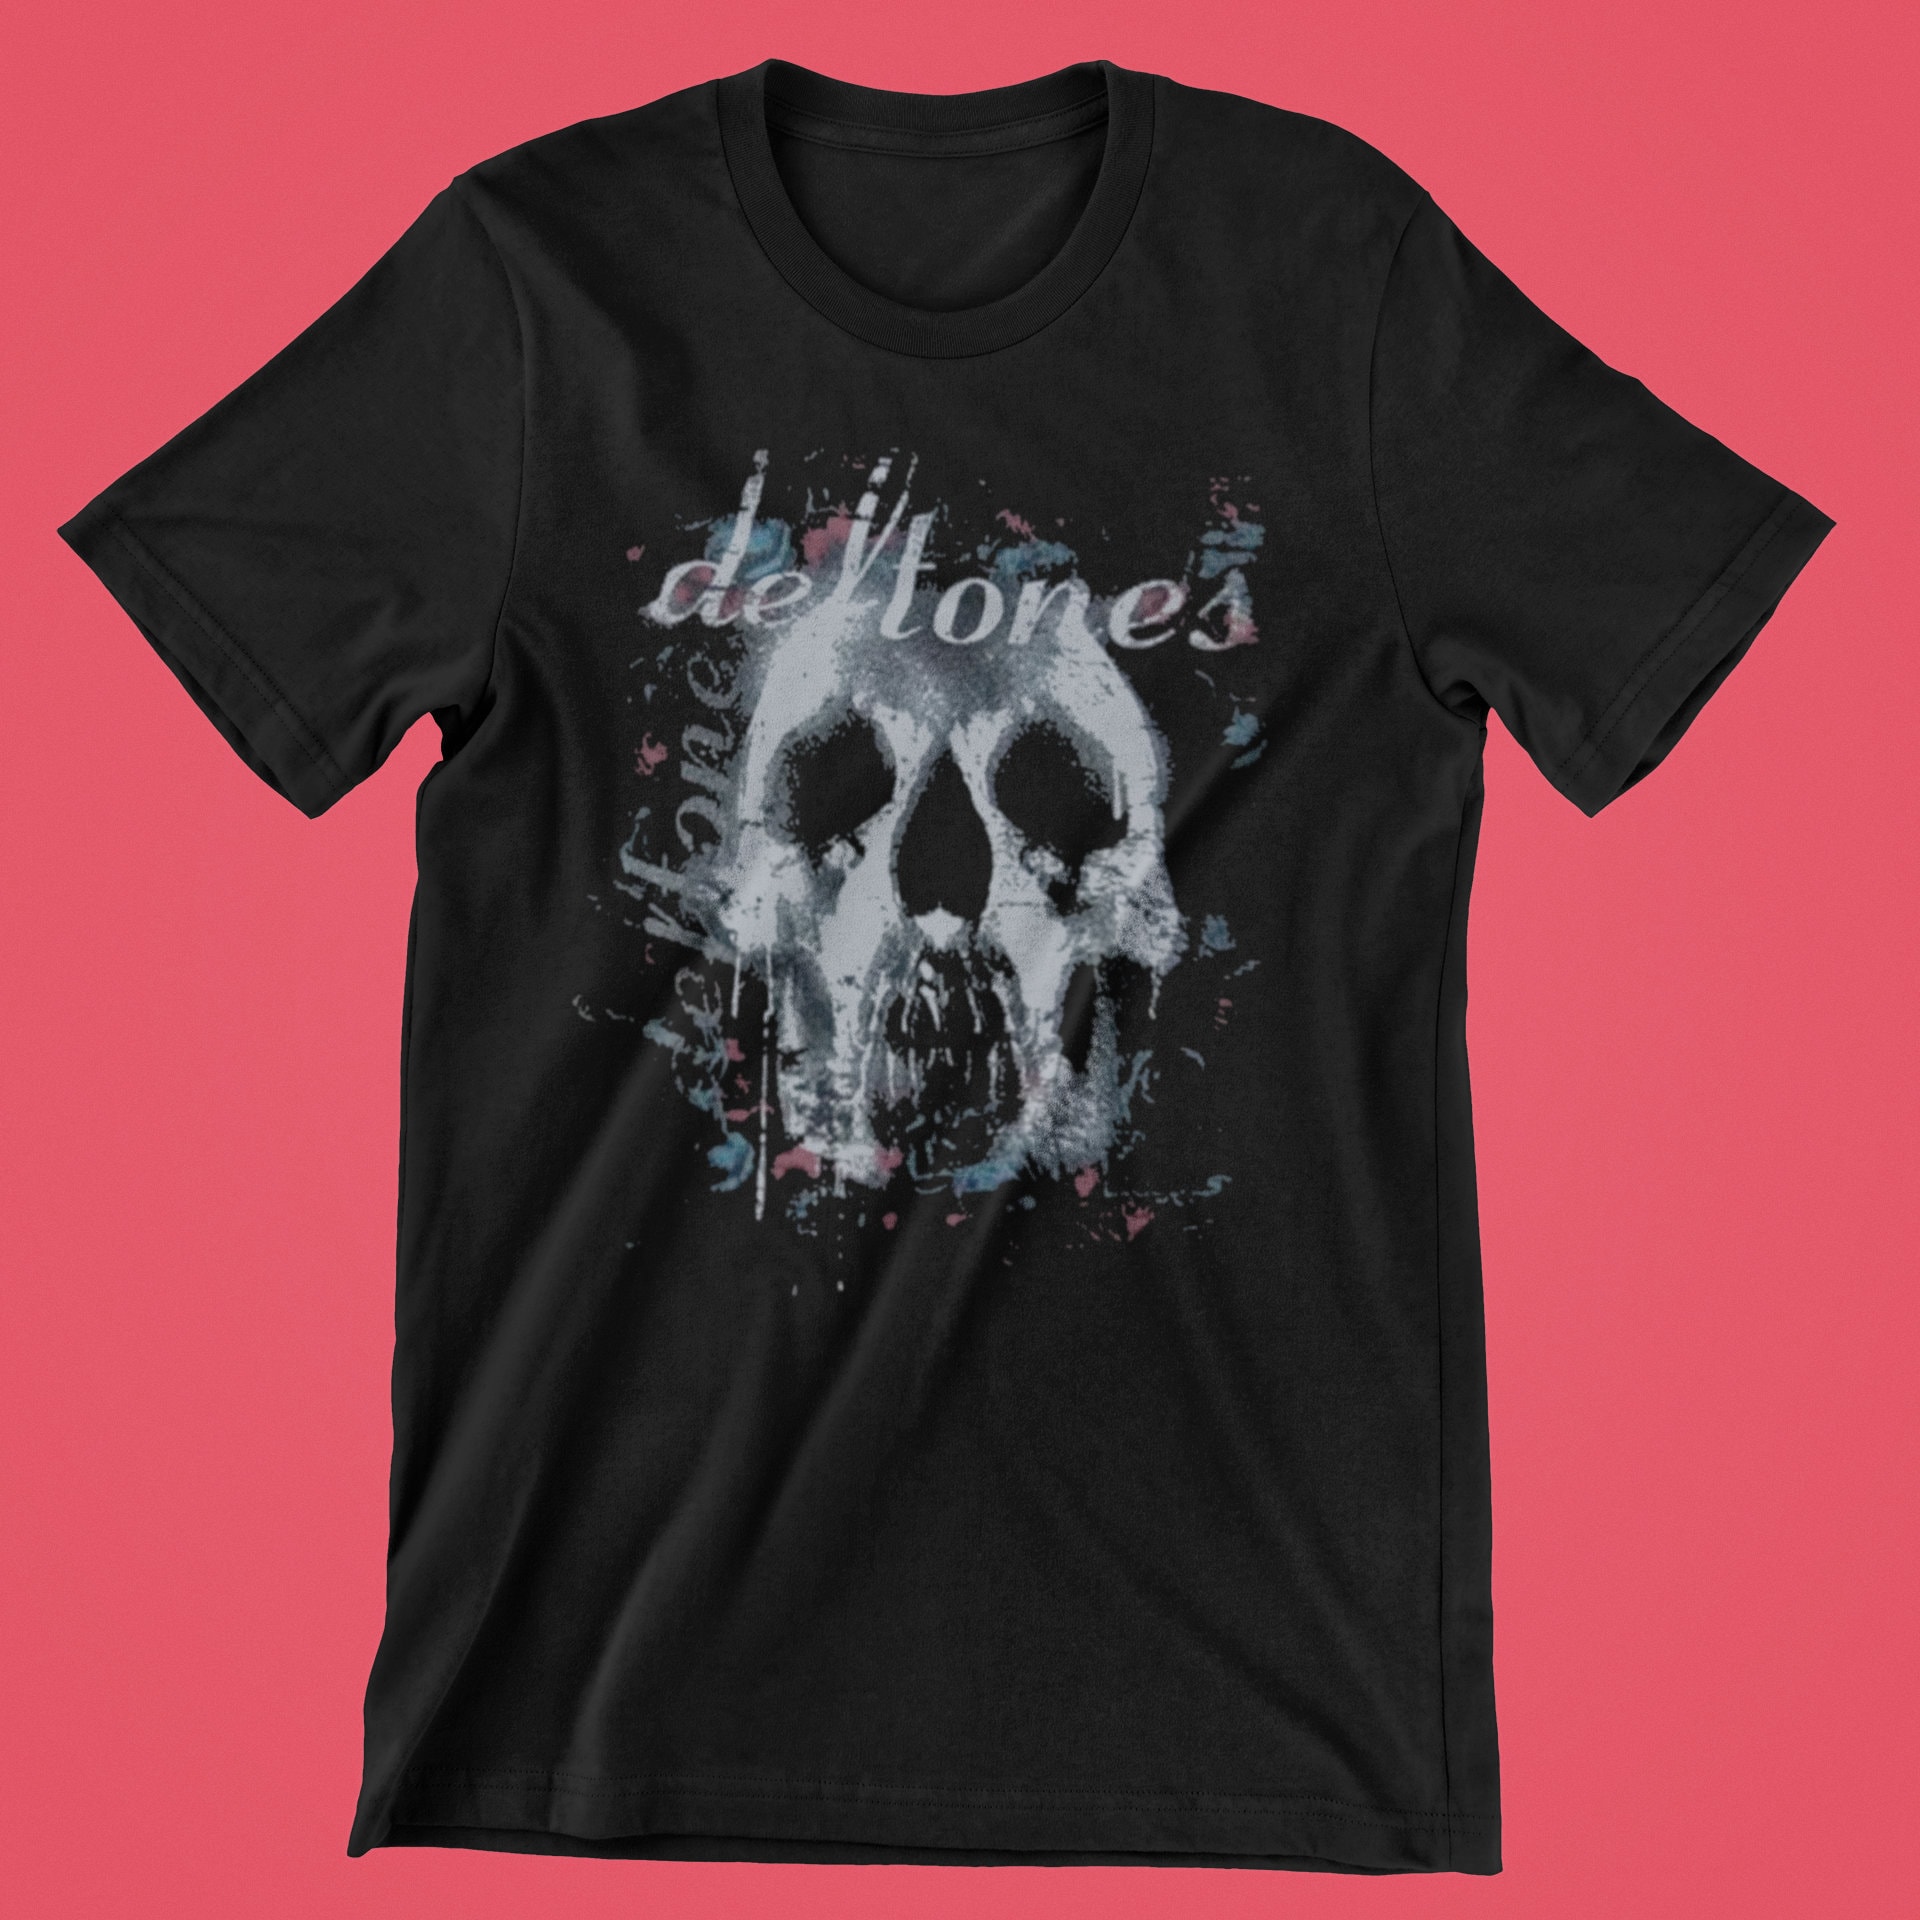 Deftone Skull Black T Shirt Band